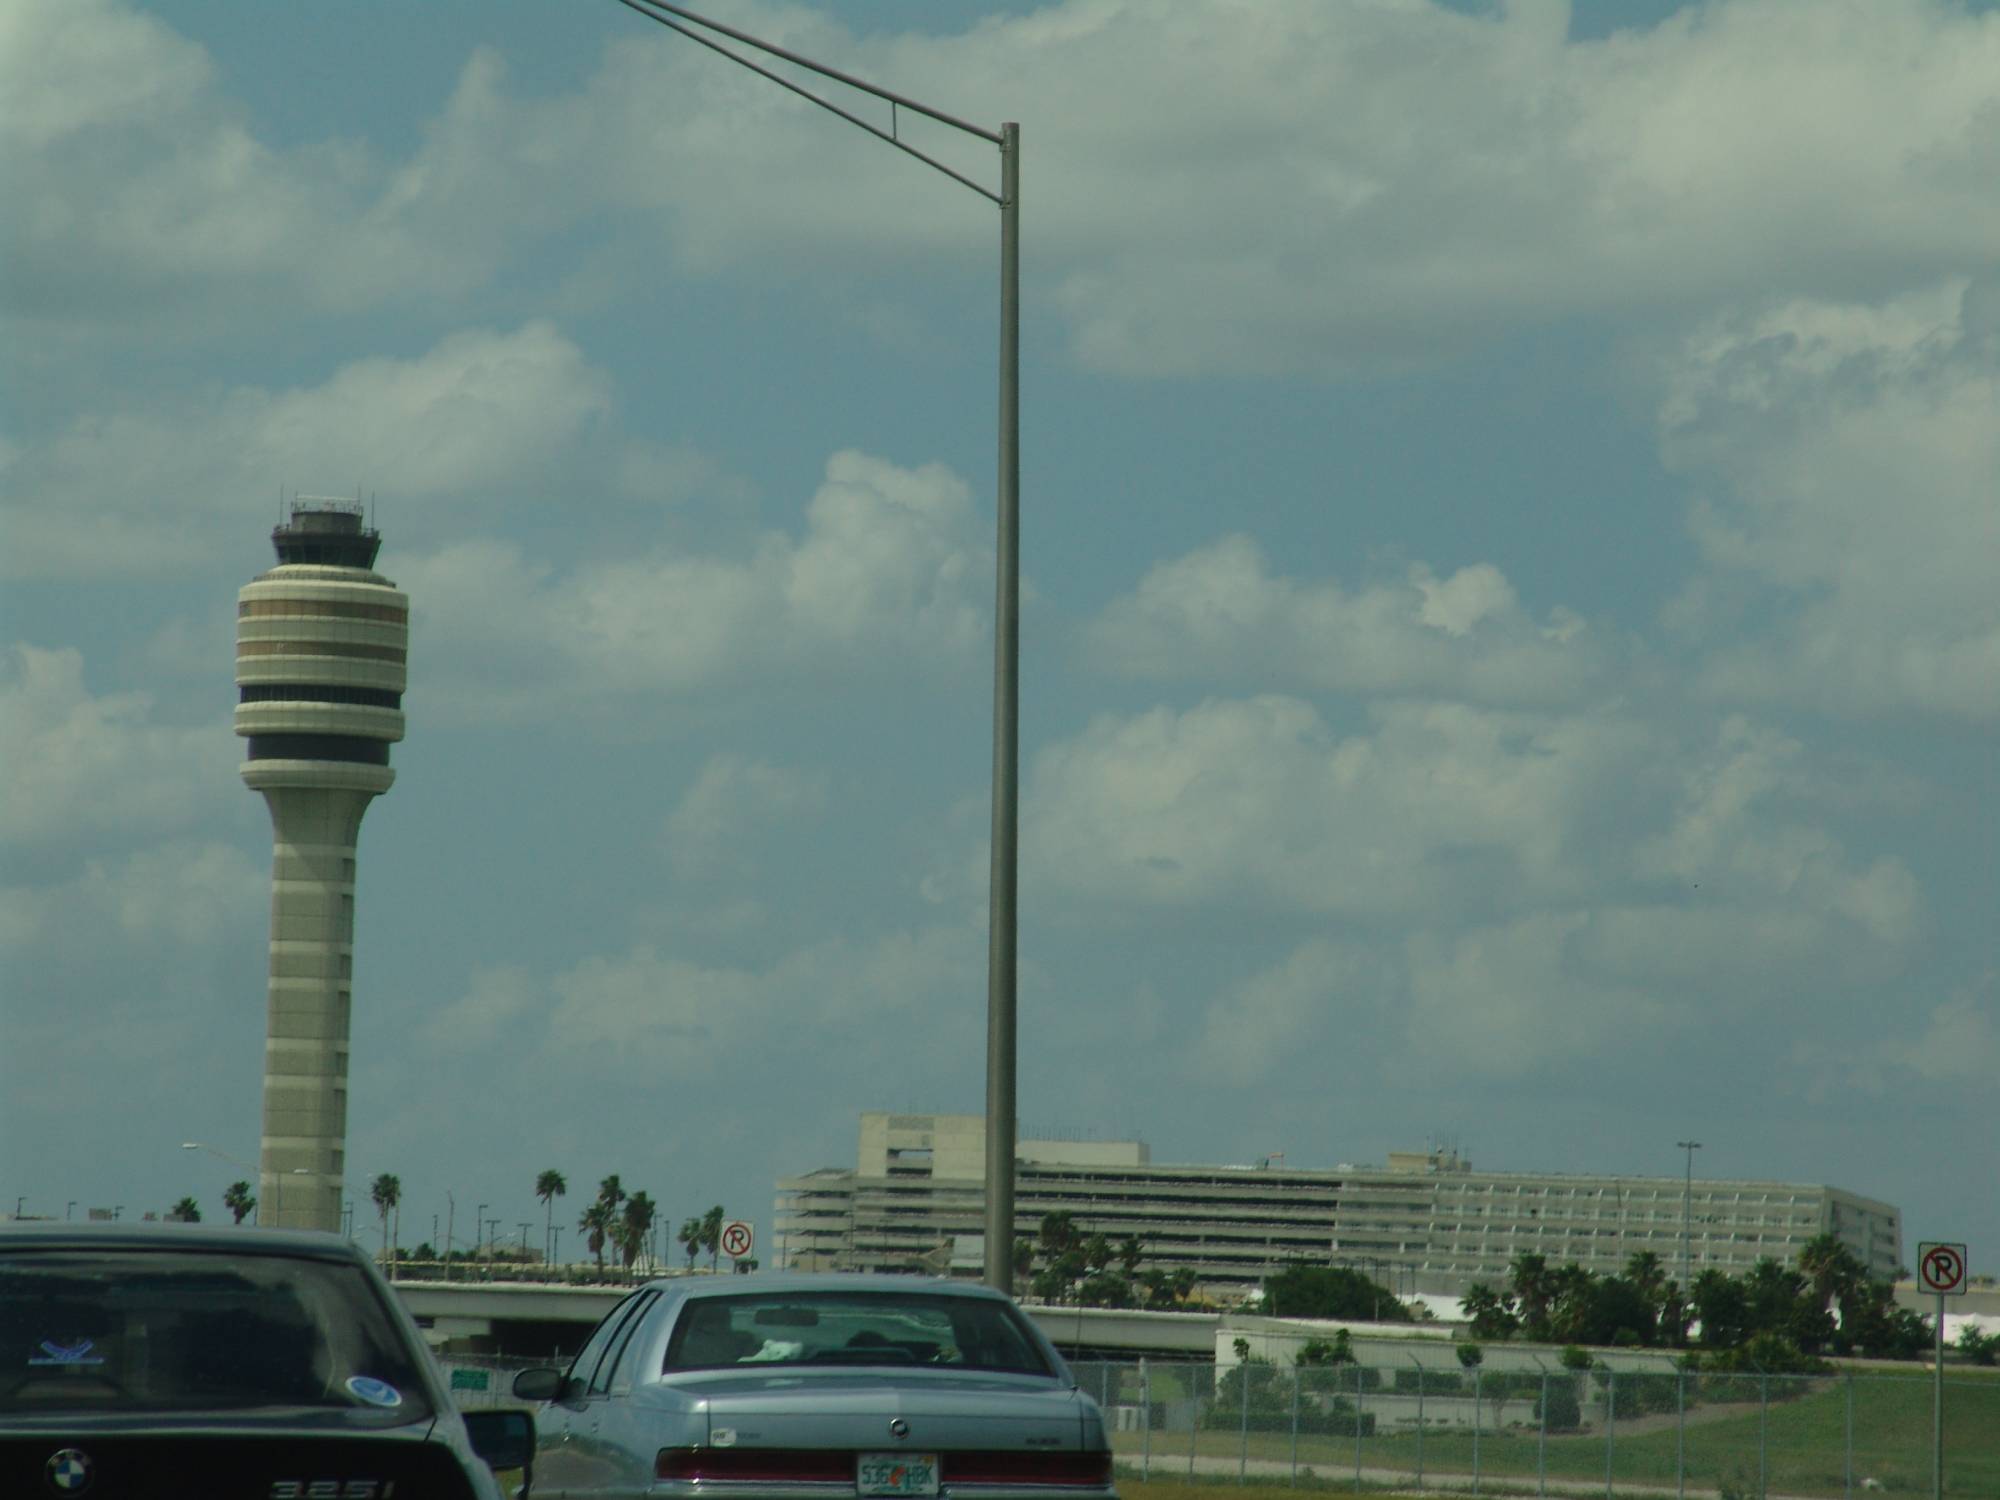 Orlando International Airport